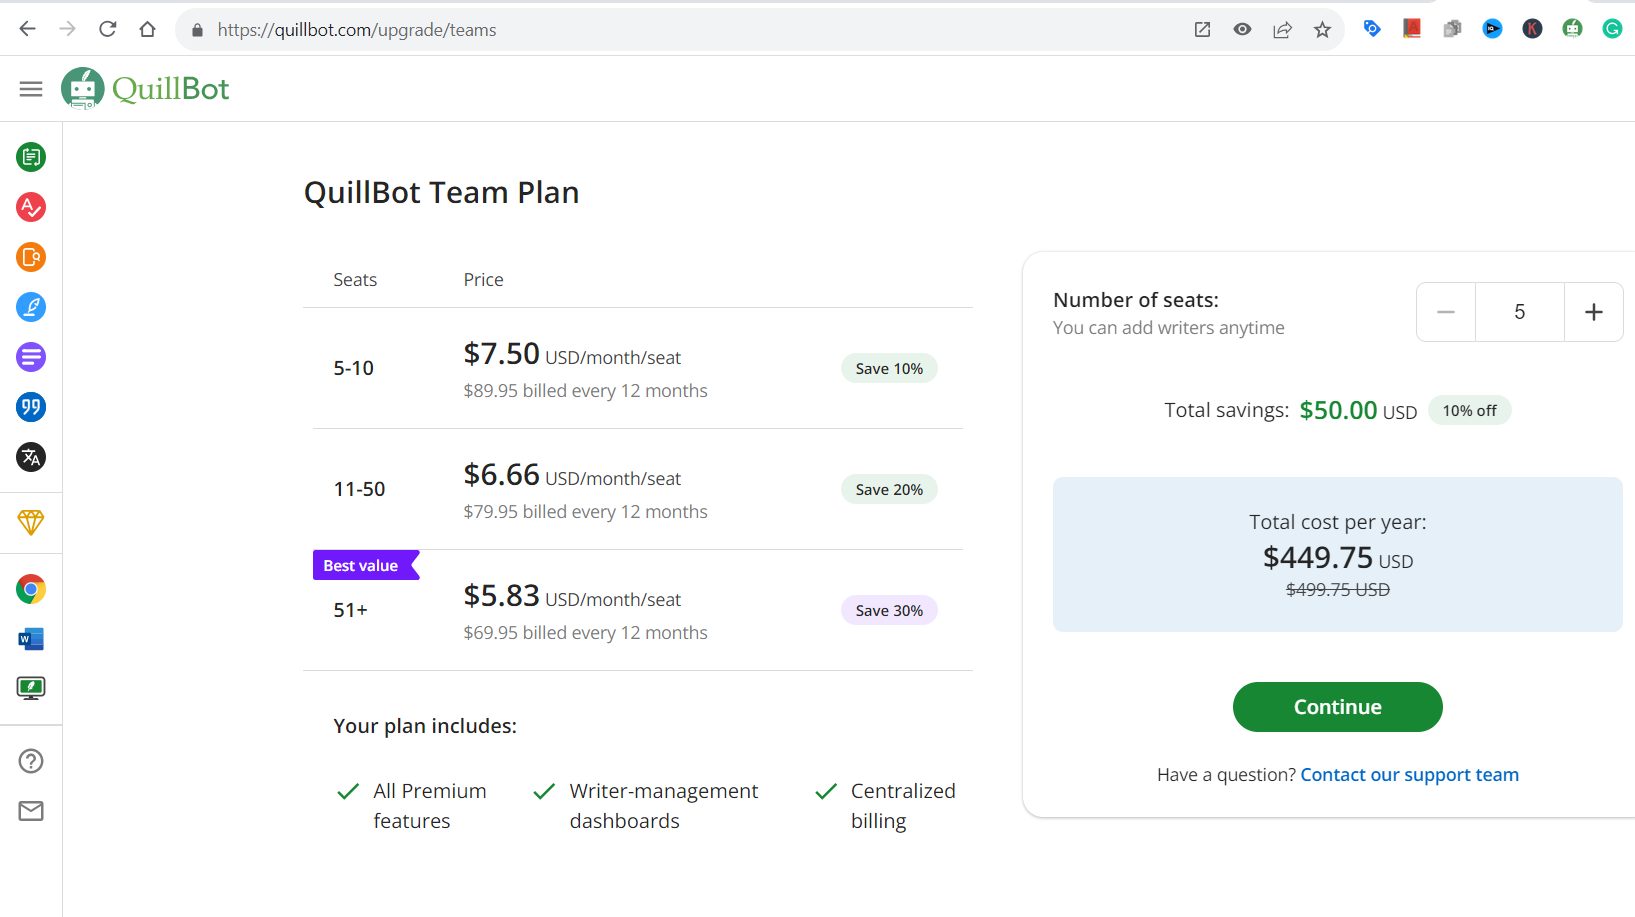 quillbot team pricing plan